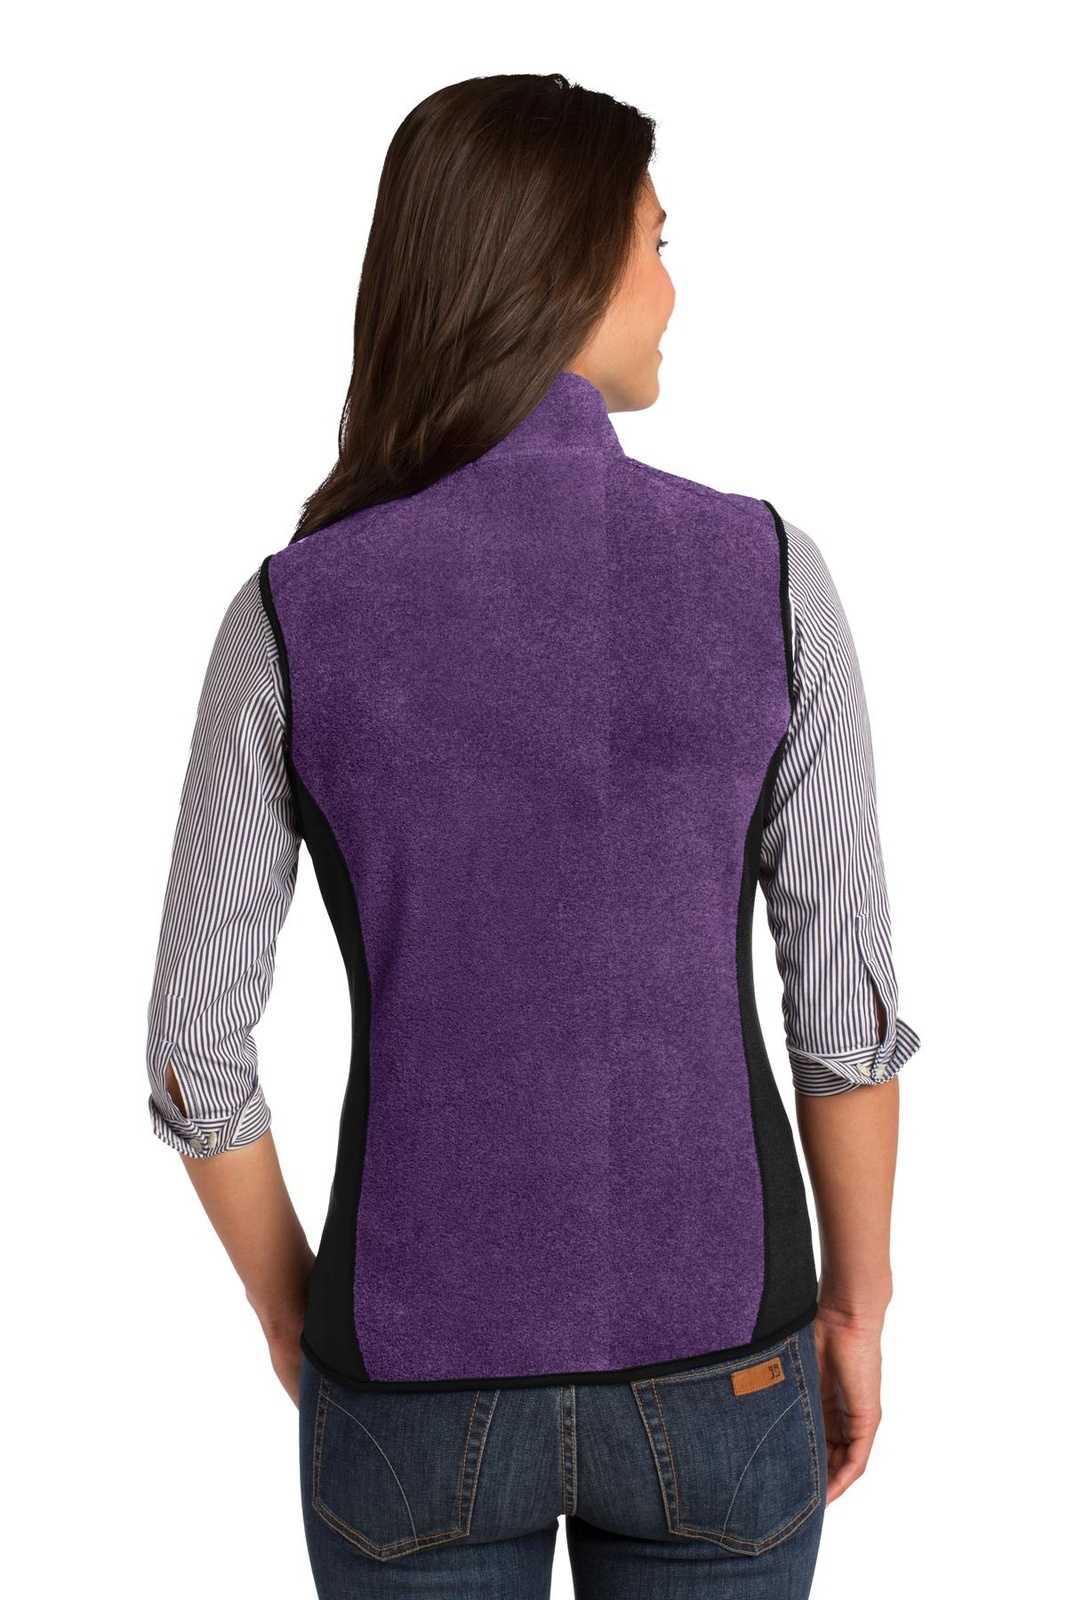 Port Authority L228 Ladies R-Tek Pro Fleece Full-Zip Vest - Purple Heather Black - HIT a Double - 2